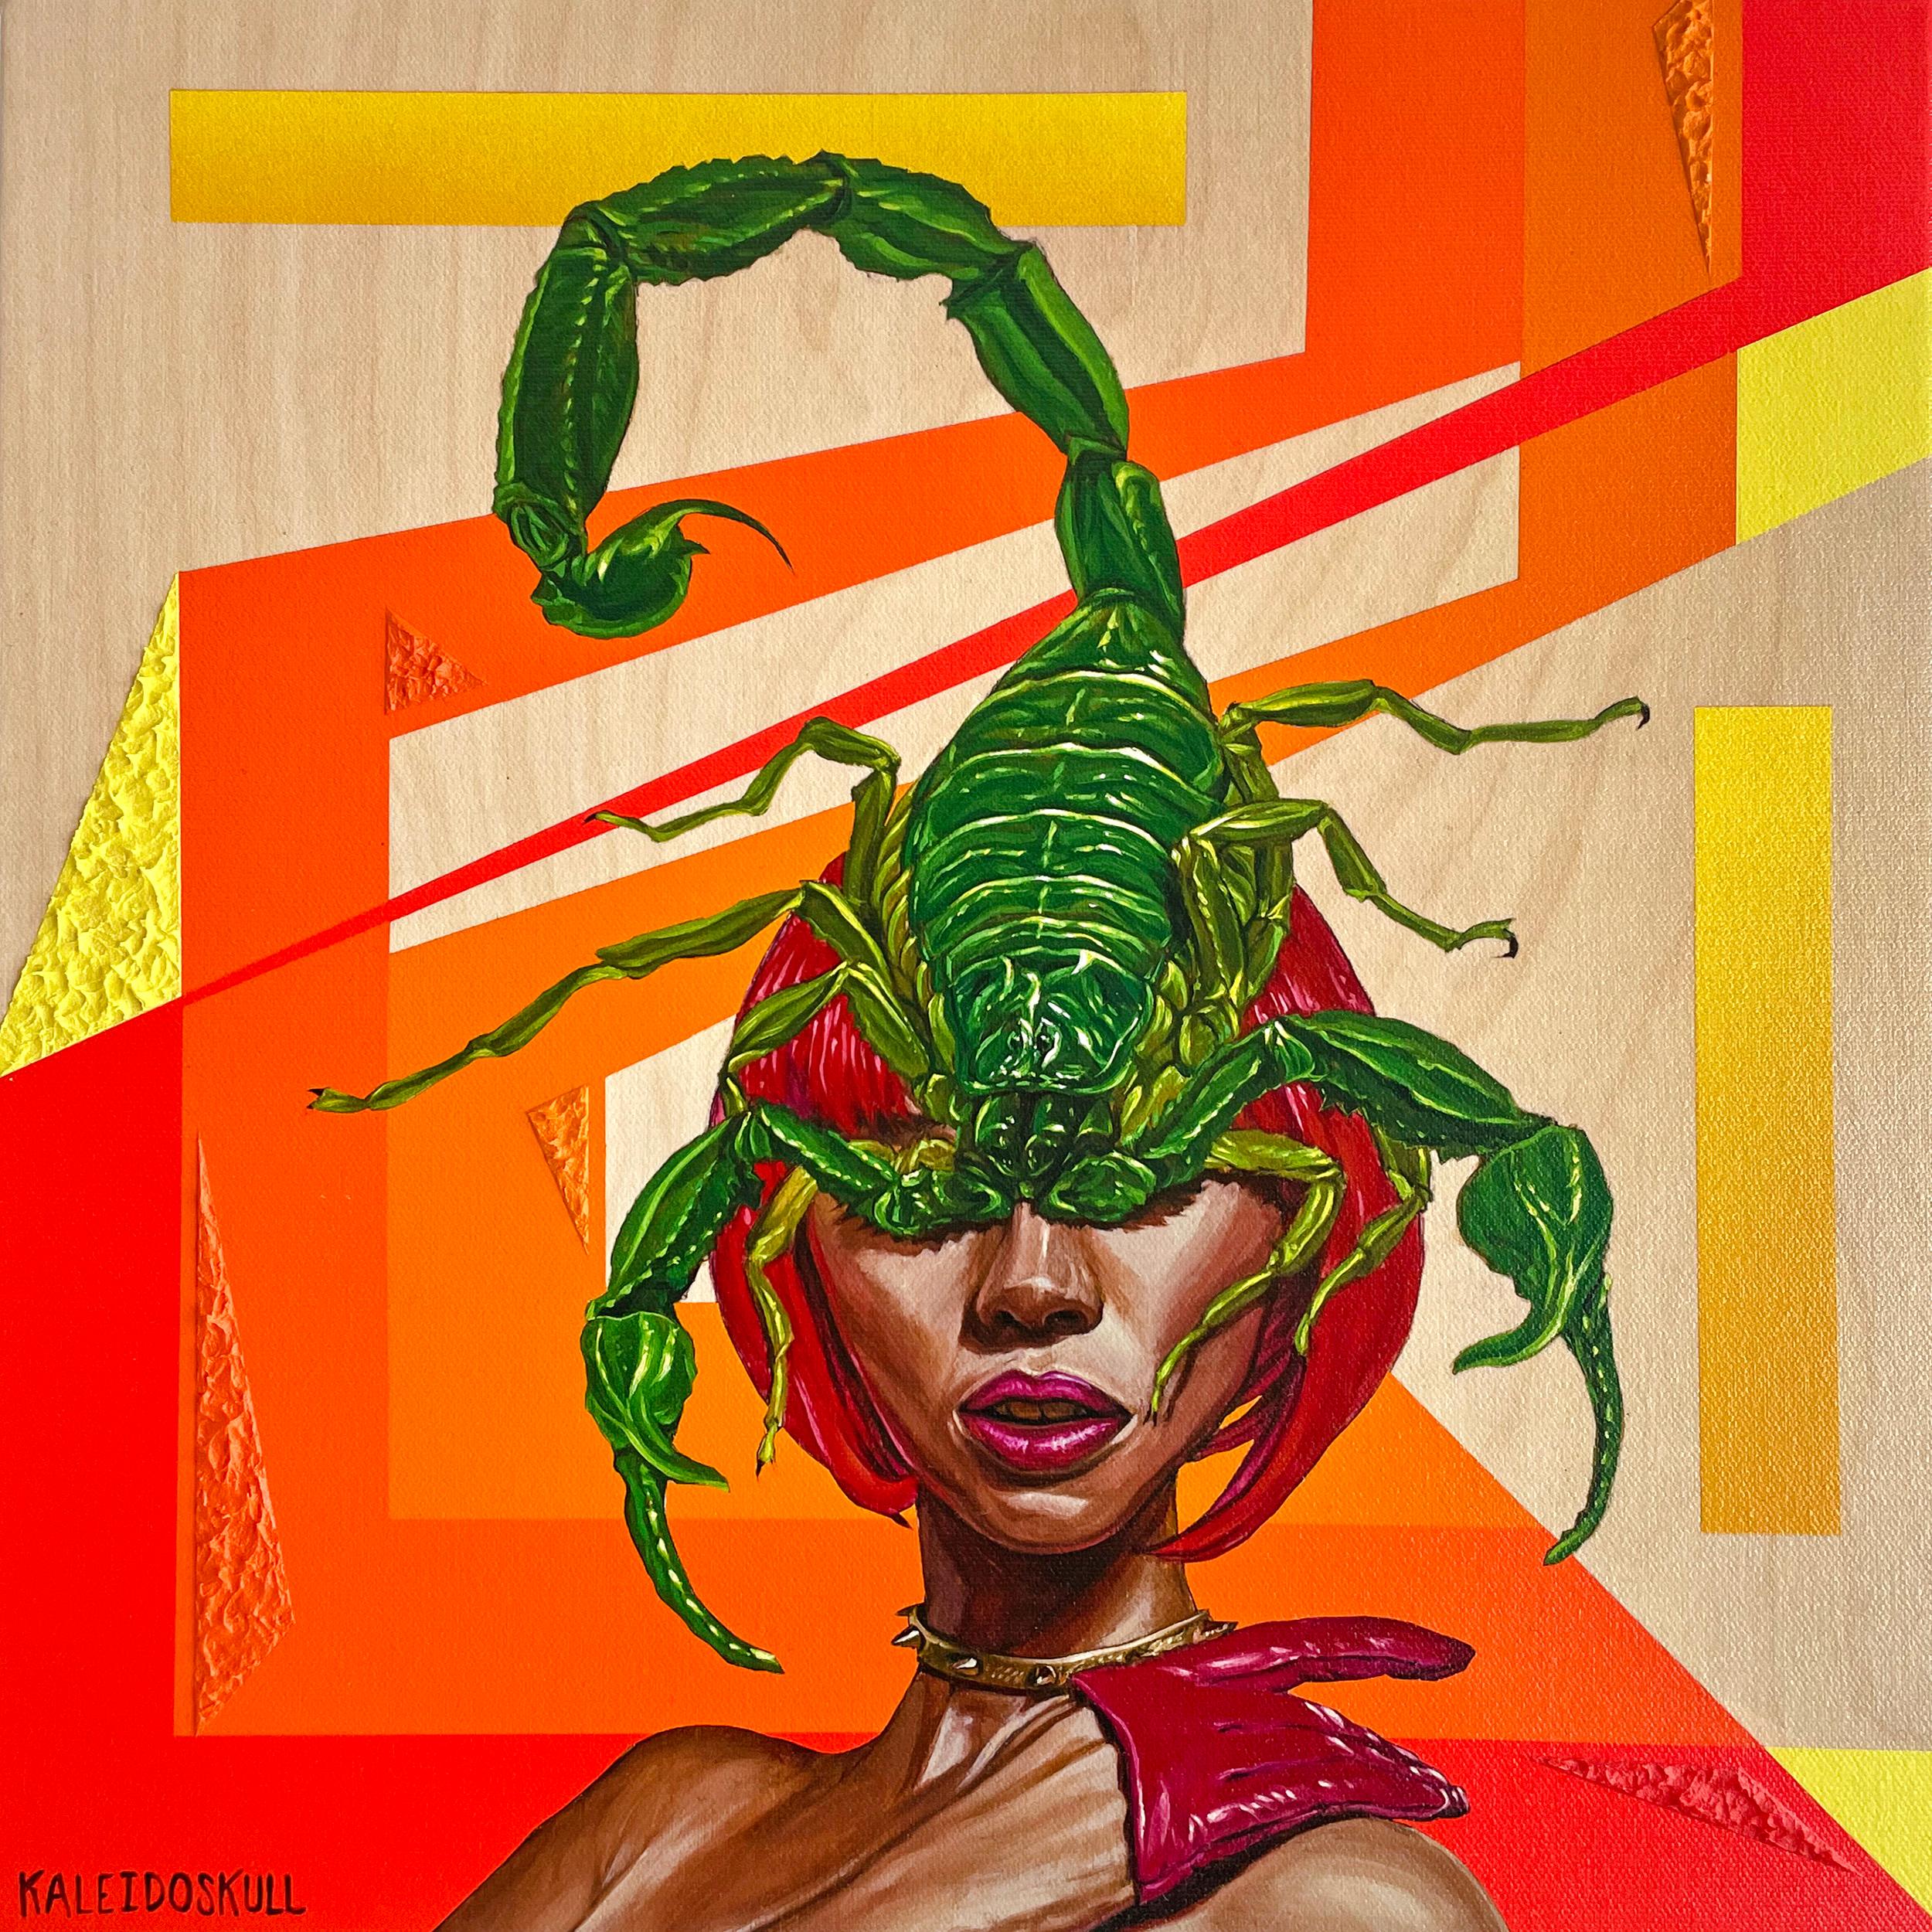 Abstract Mixed Media Artwork, "Scorpion Tongue"